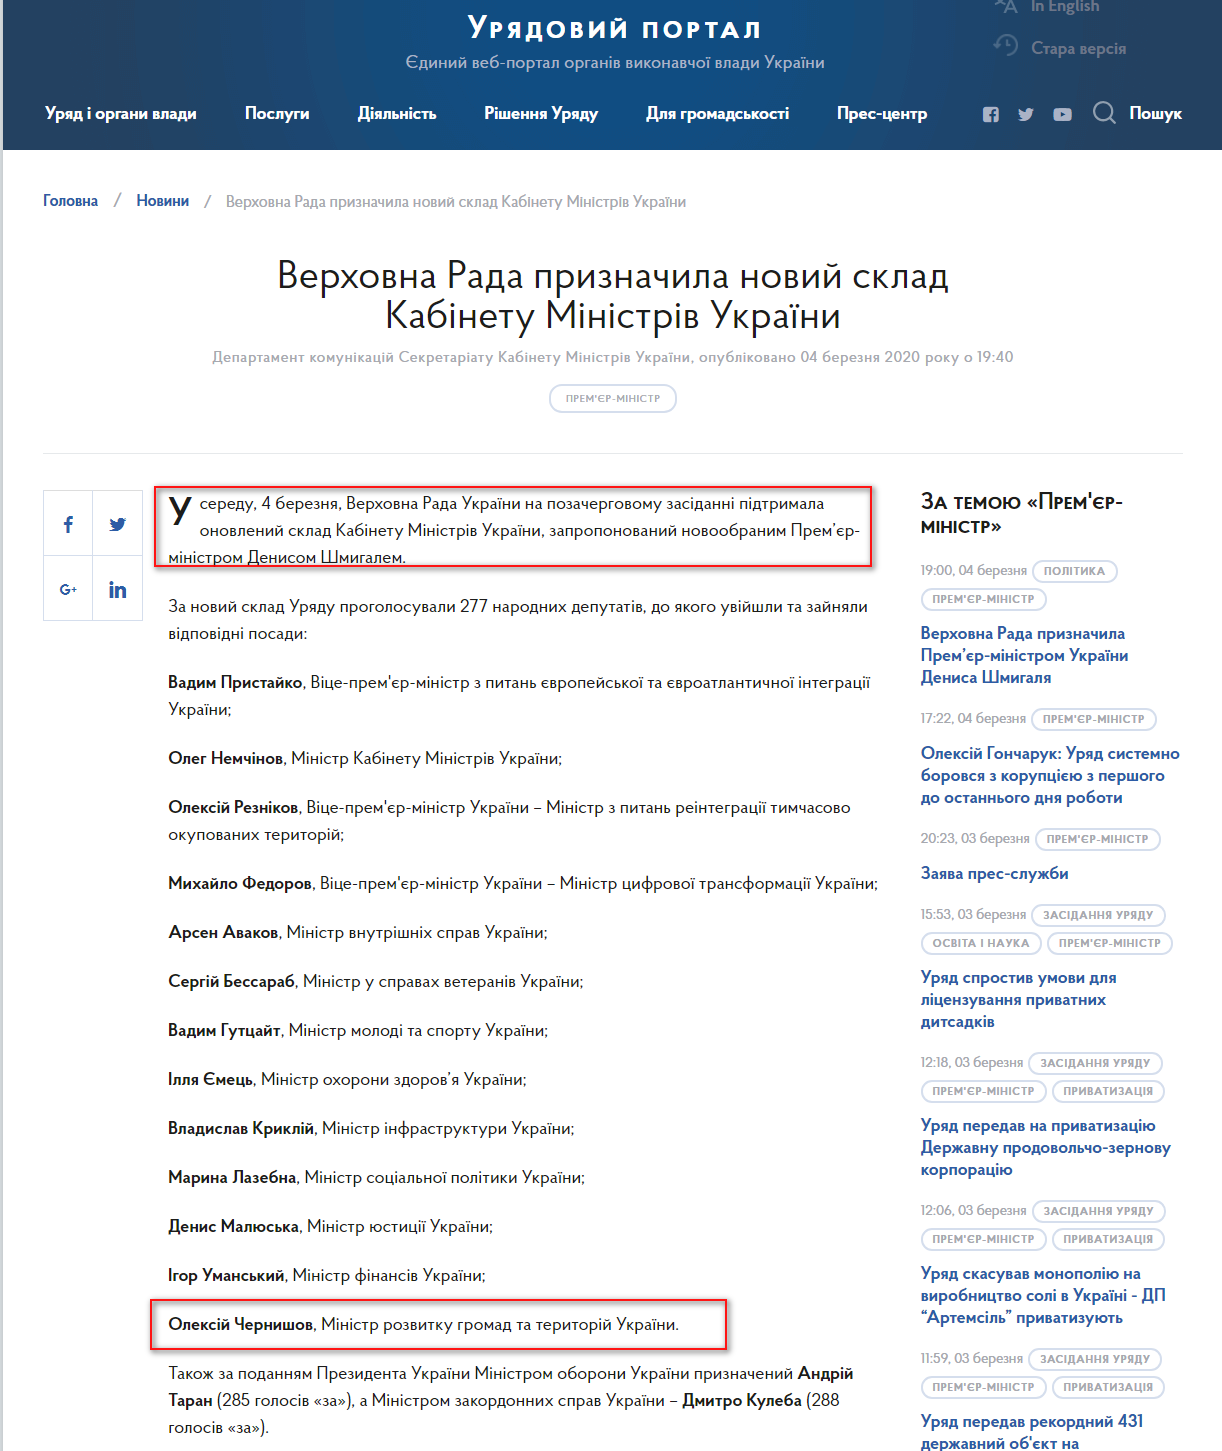 https://www.kmu.gov.ua/news/verhovna-rada-ukrayini-priznachila-sklad-novogo-kabinetu-ministriv-ukrayini